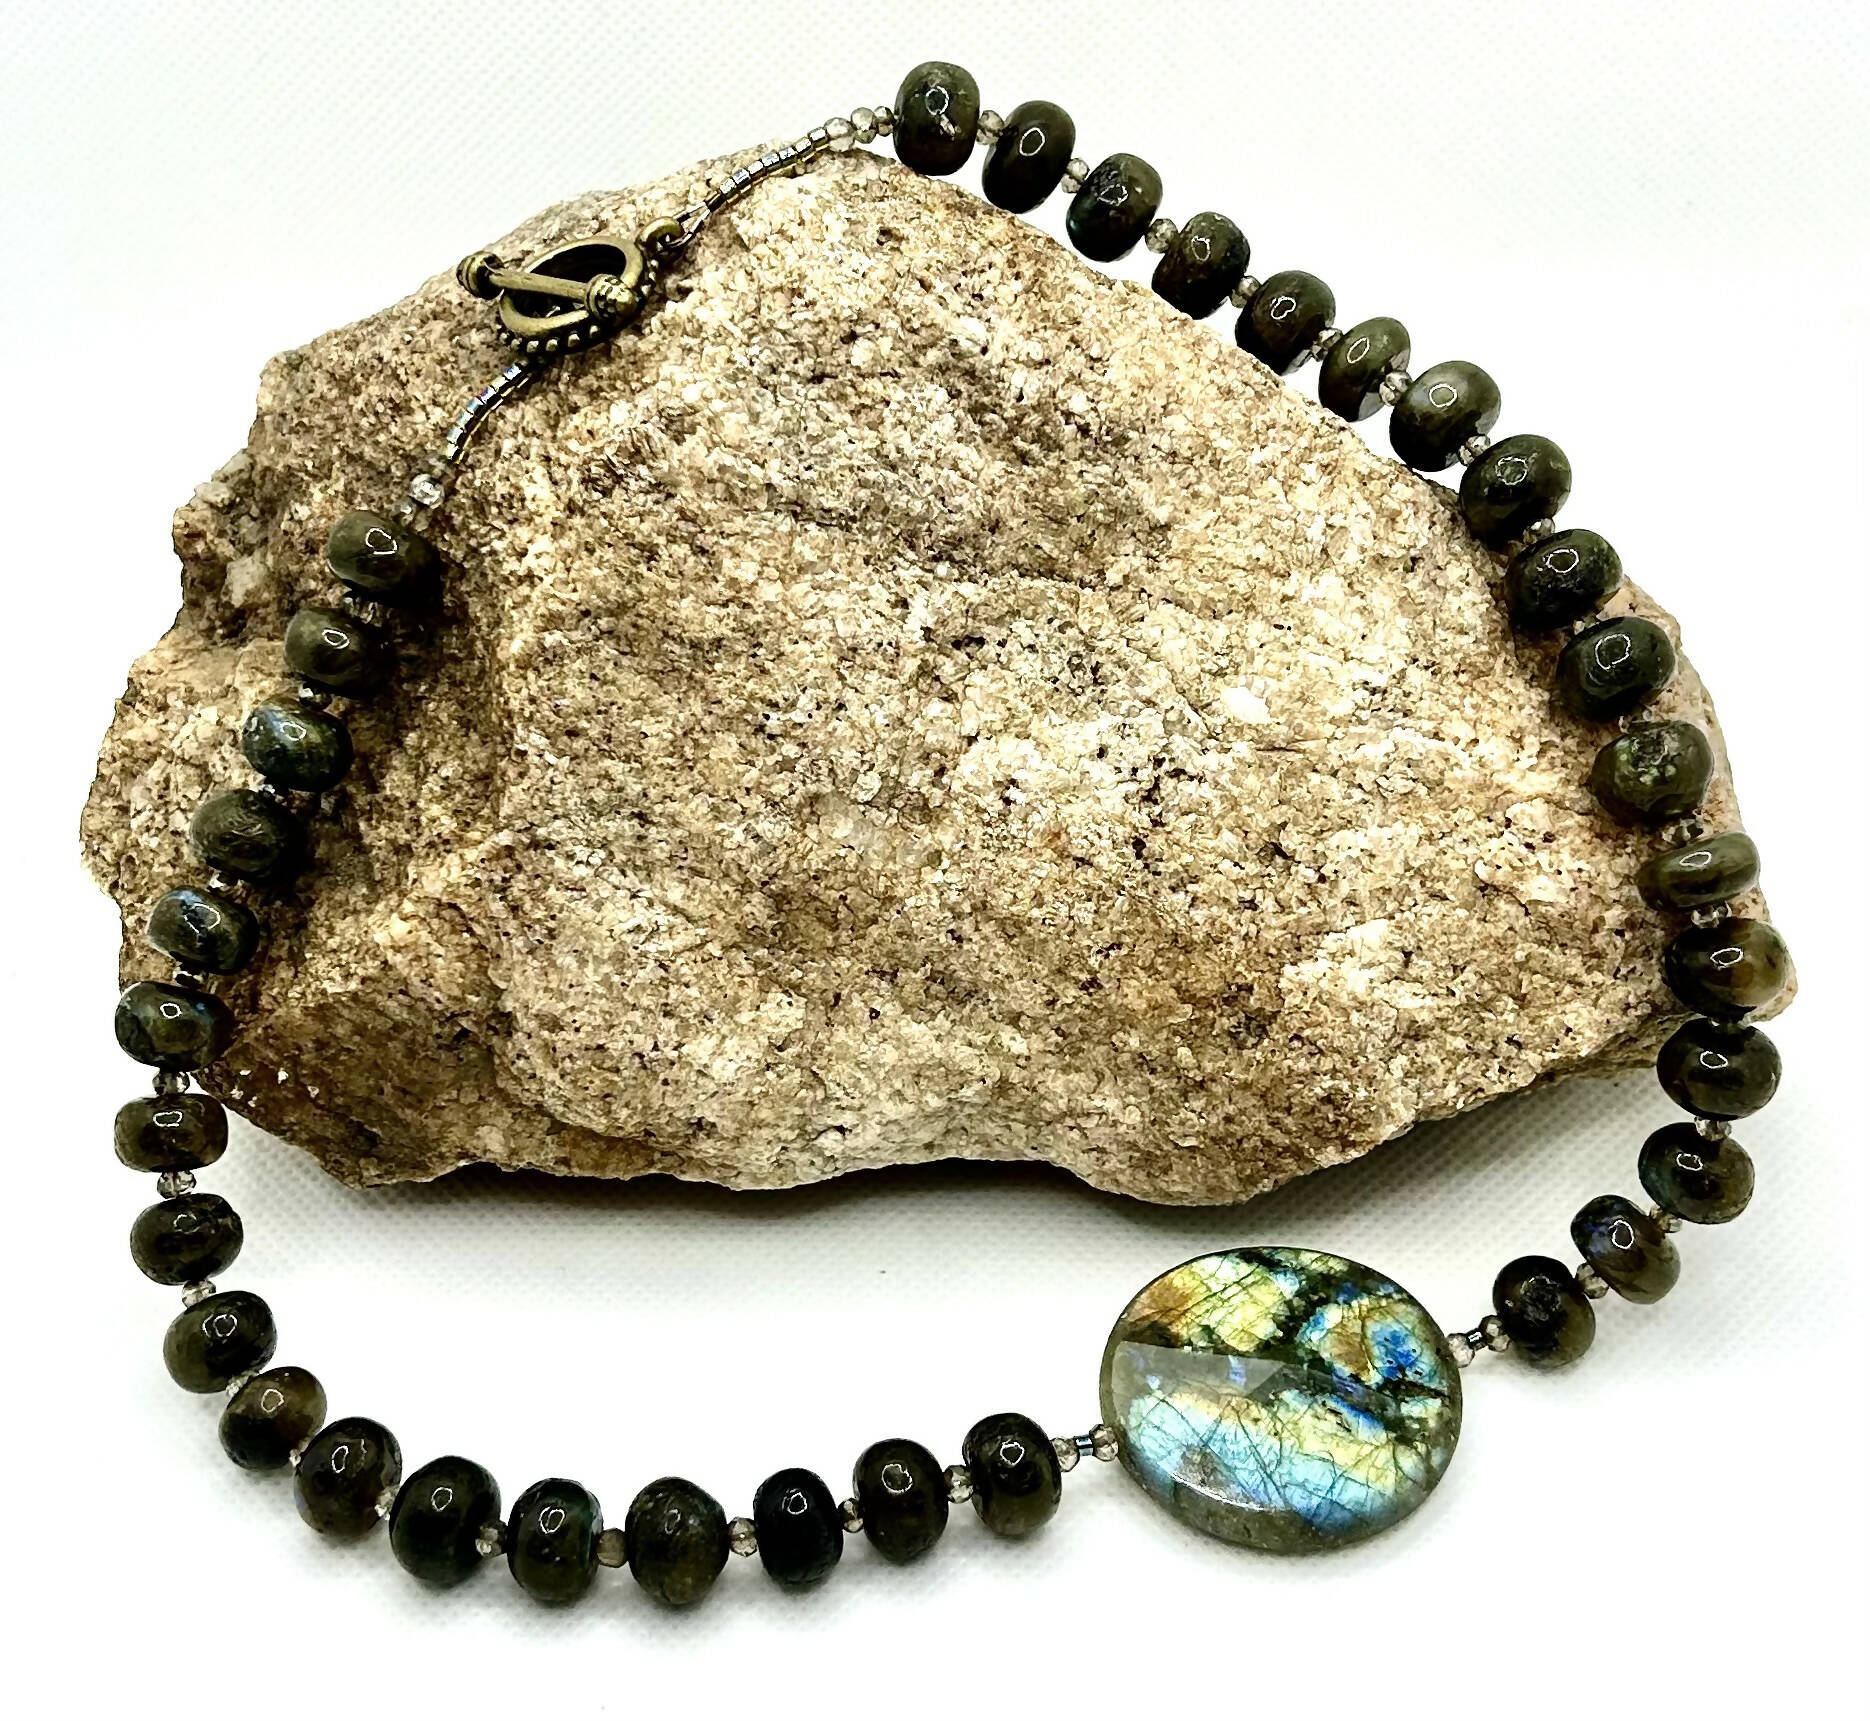 Labradorite Kaleidoscope Necklace with Swarovski Crystals